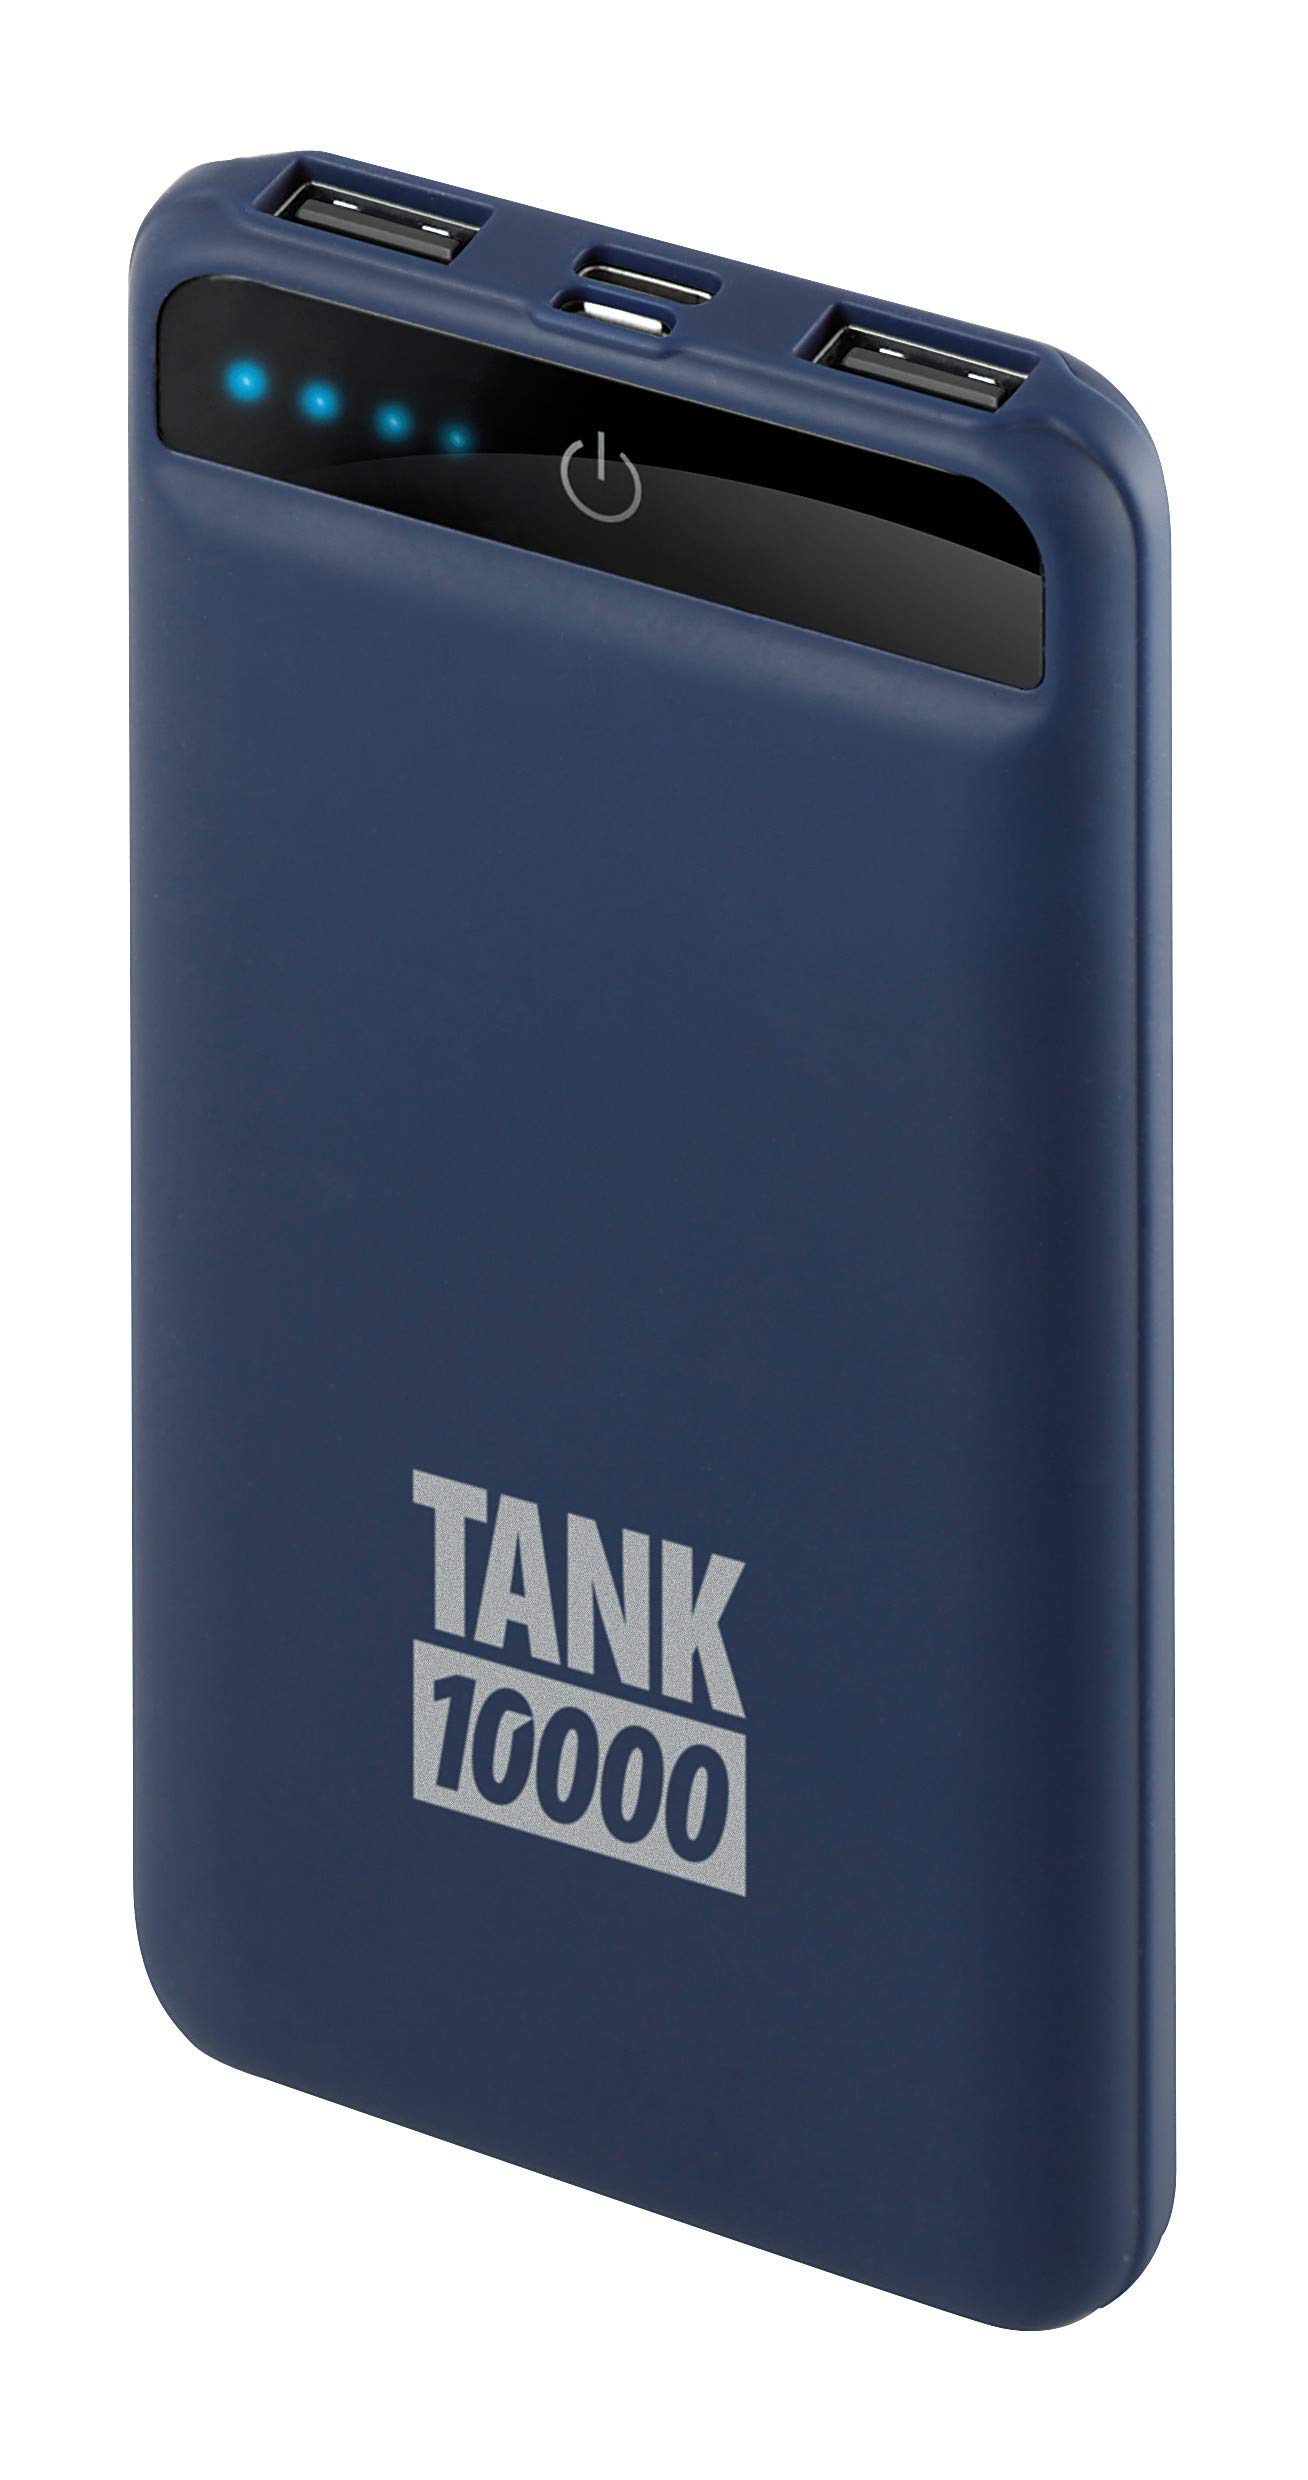 Lampa 38823 Tank 10000, tragbares USB-Ladegerät von Lampa